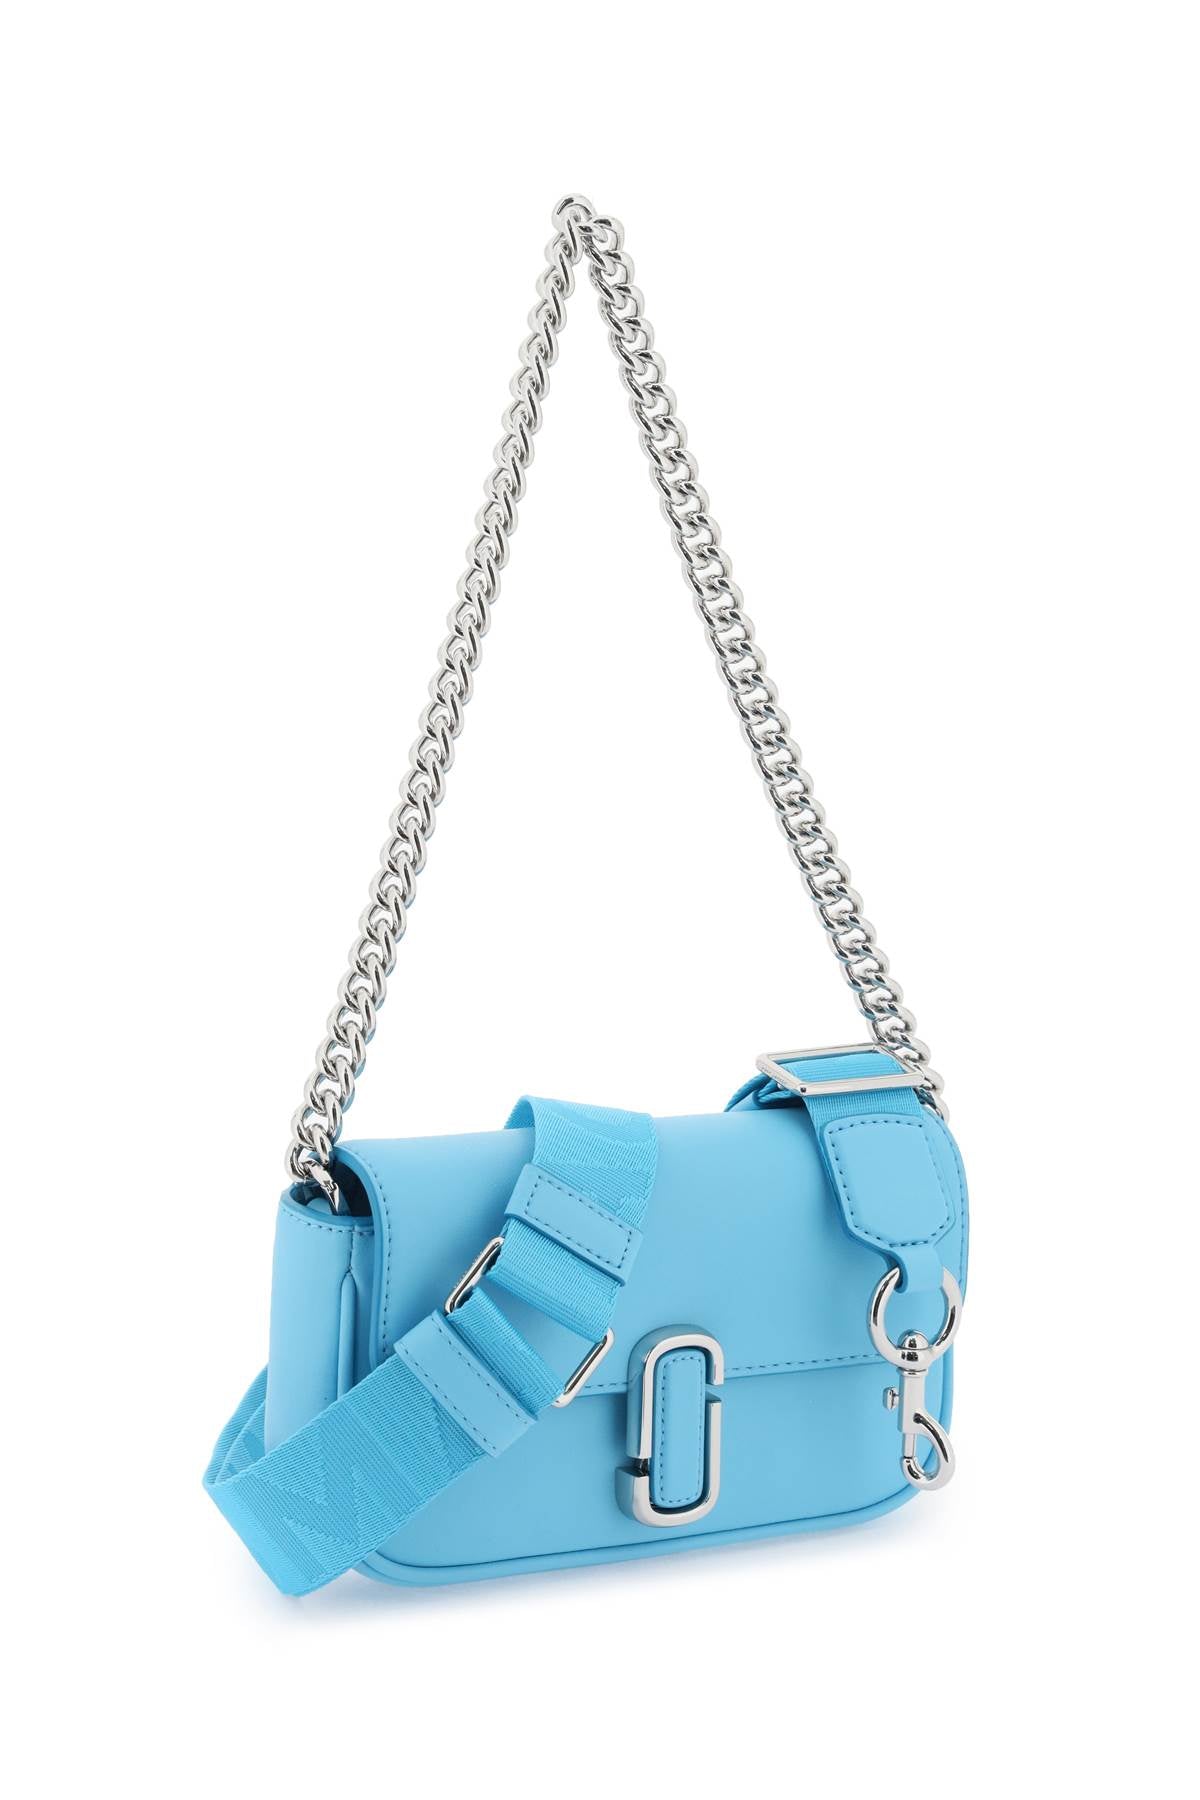 Meet the current best-seller: Drawstring Bucket Bag in All Blue. 👀 |  Instagram